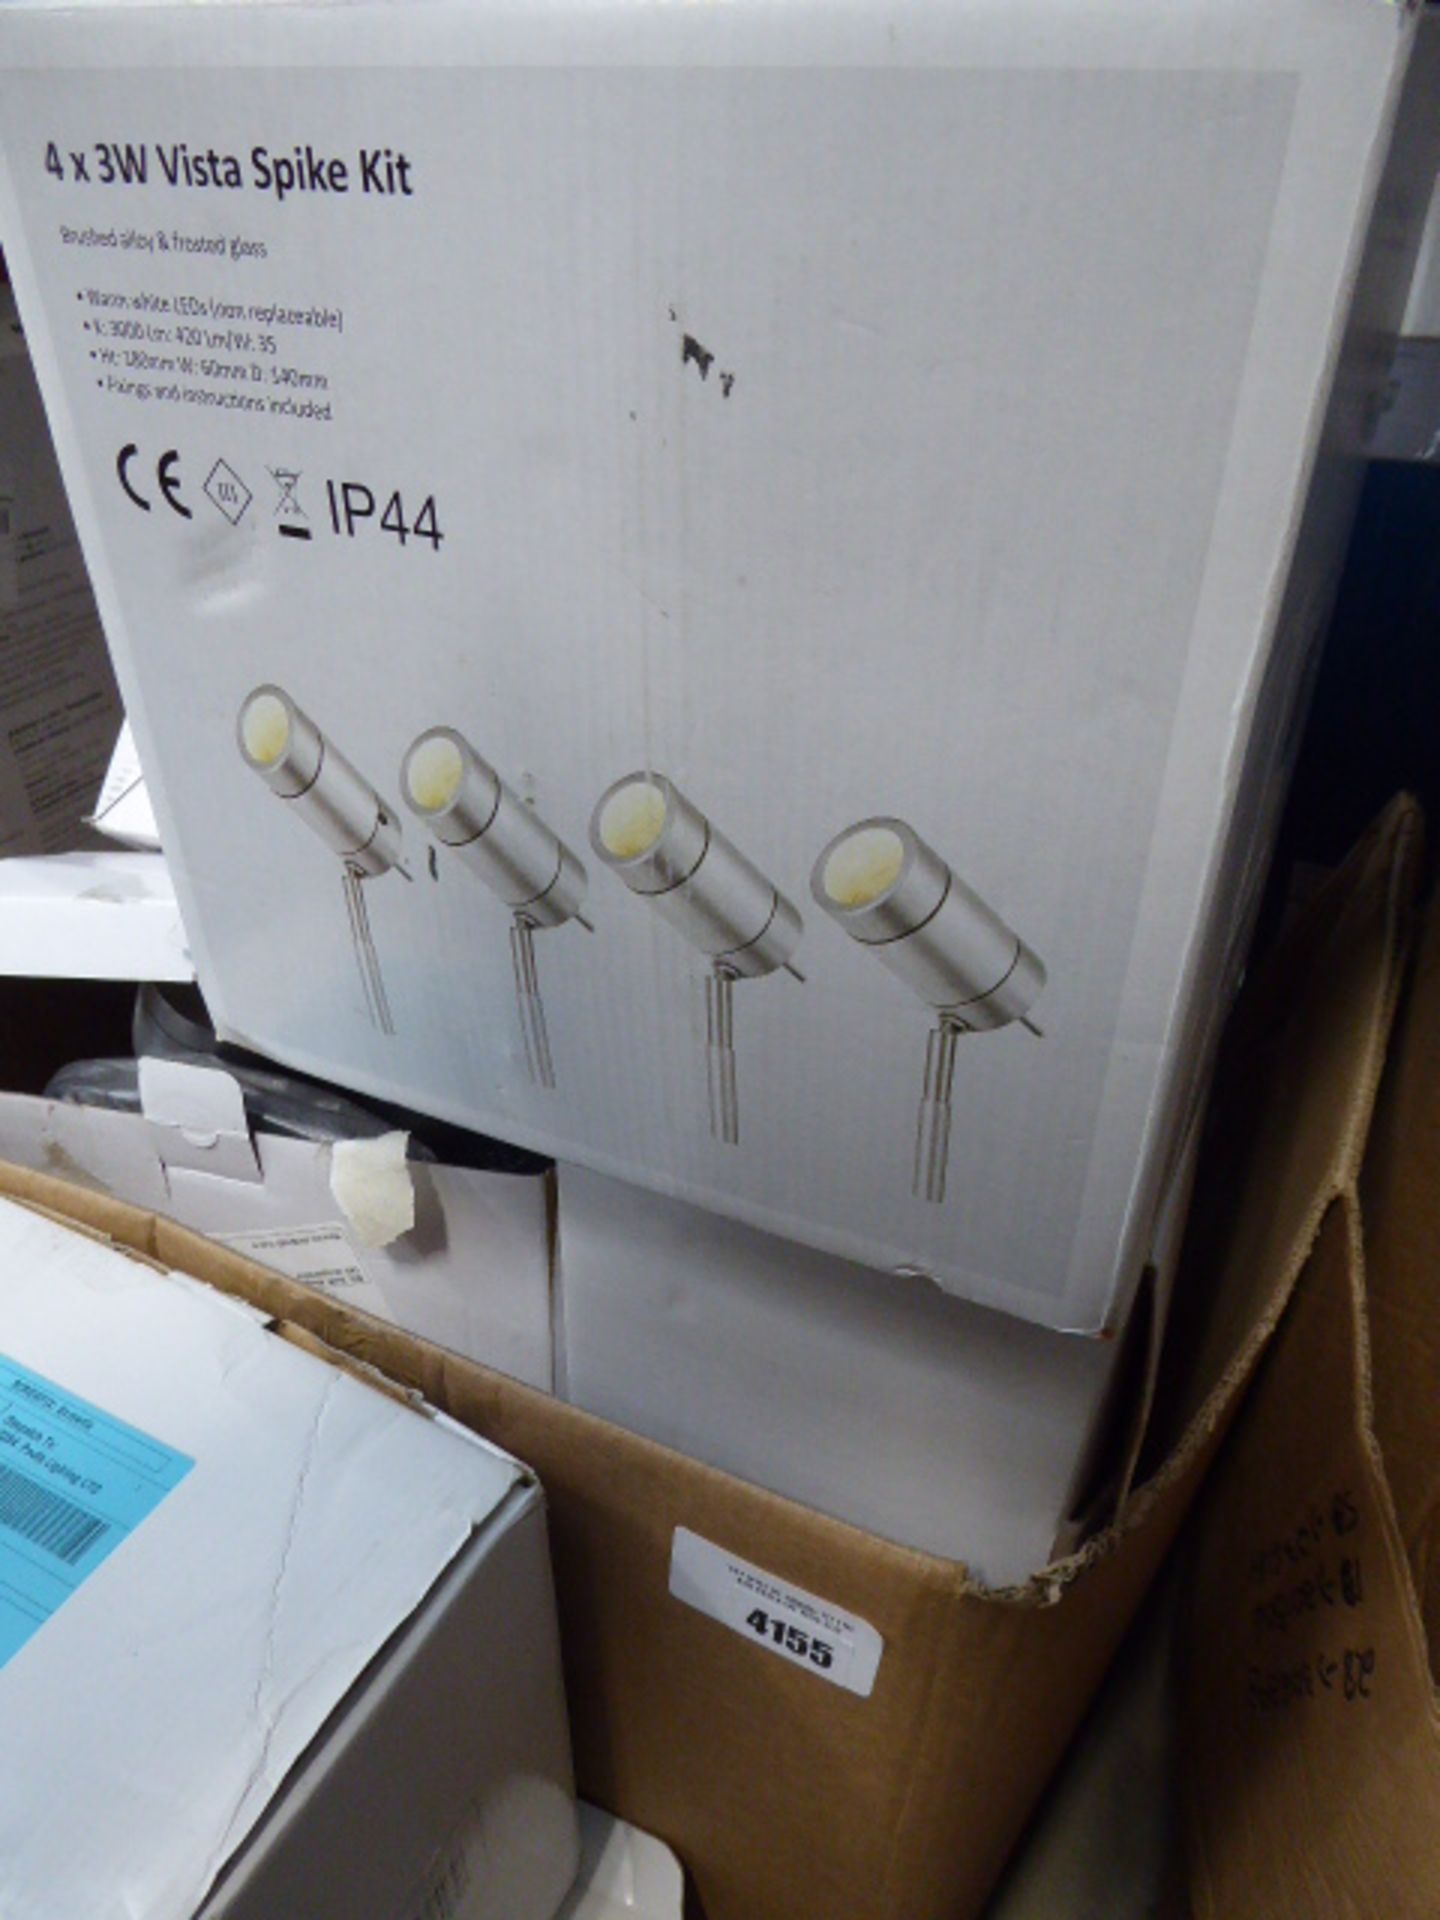 Large box of Vista spike kit lights